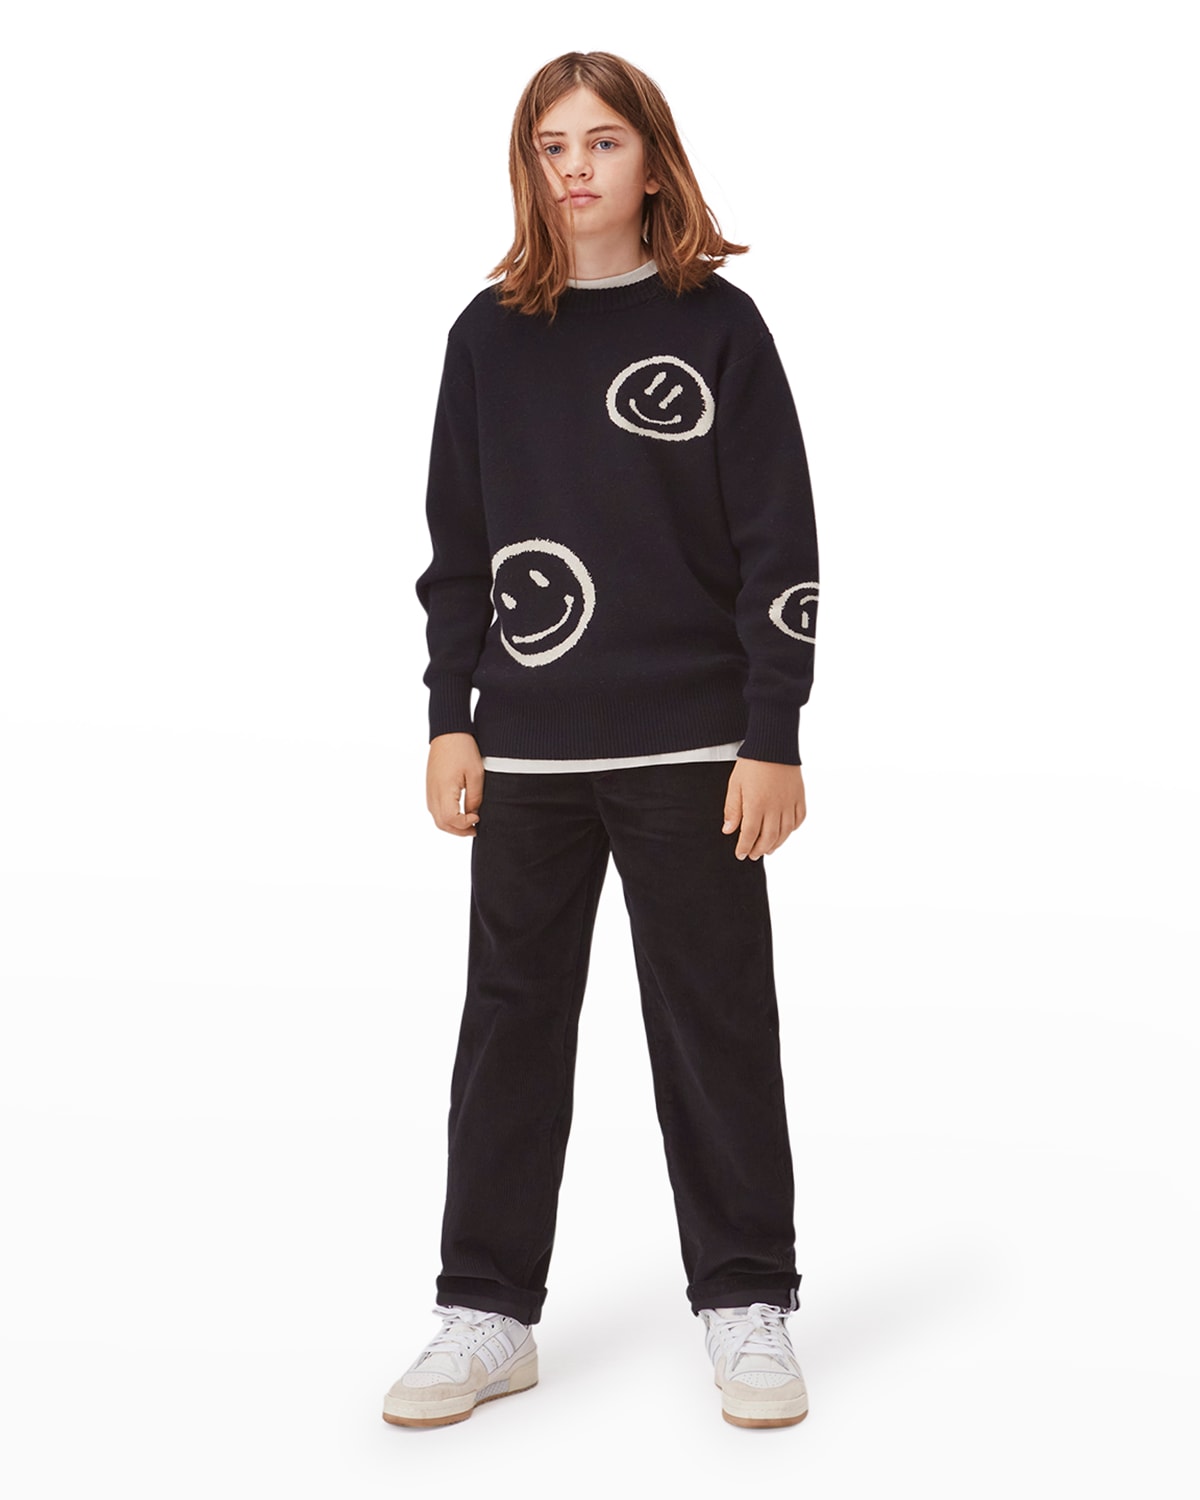 Boy's Bello Smileys Cotton/Wool Sweater, Size 8-12